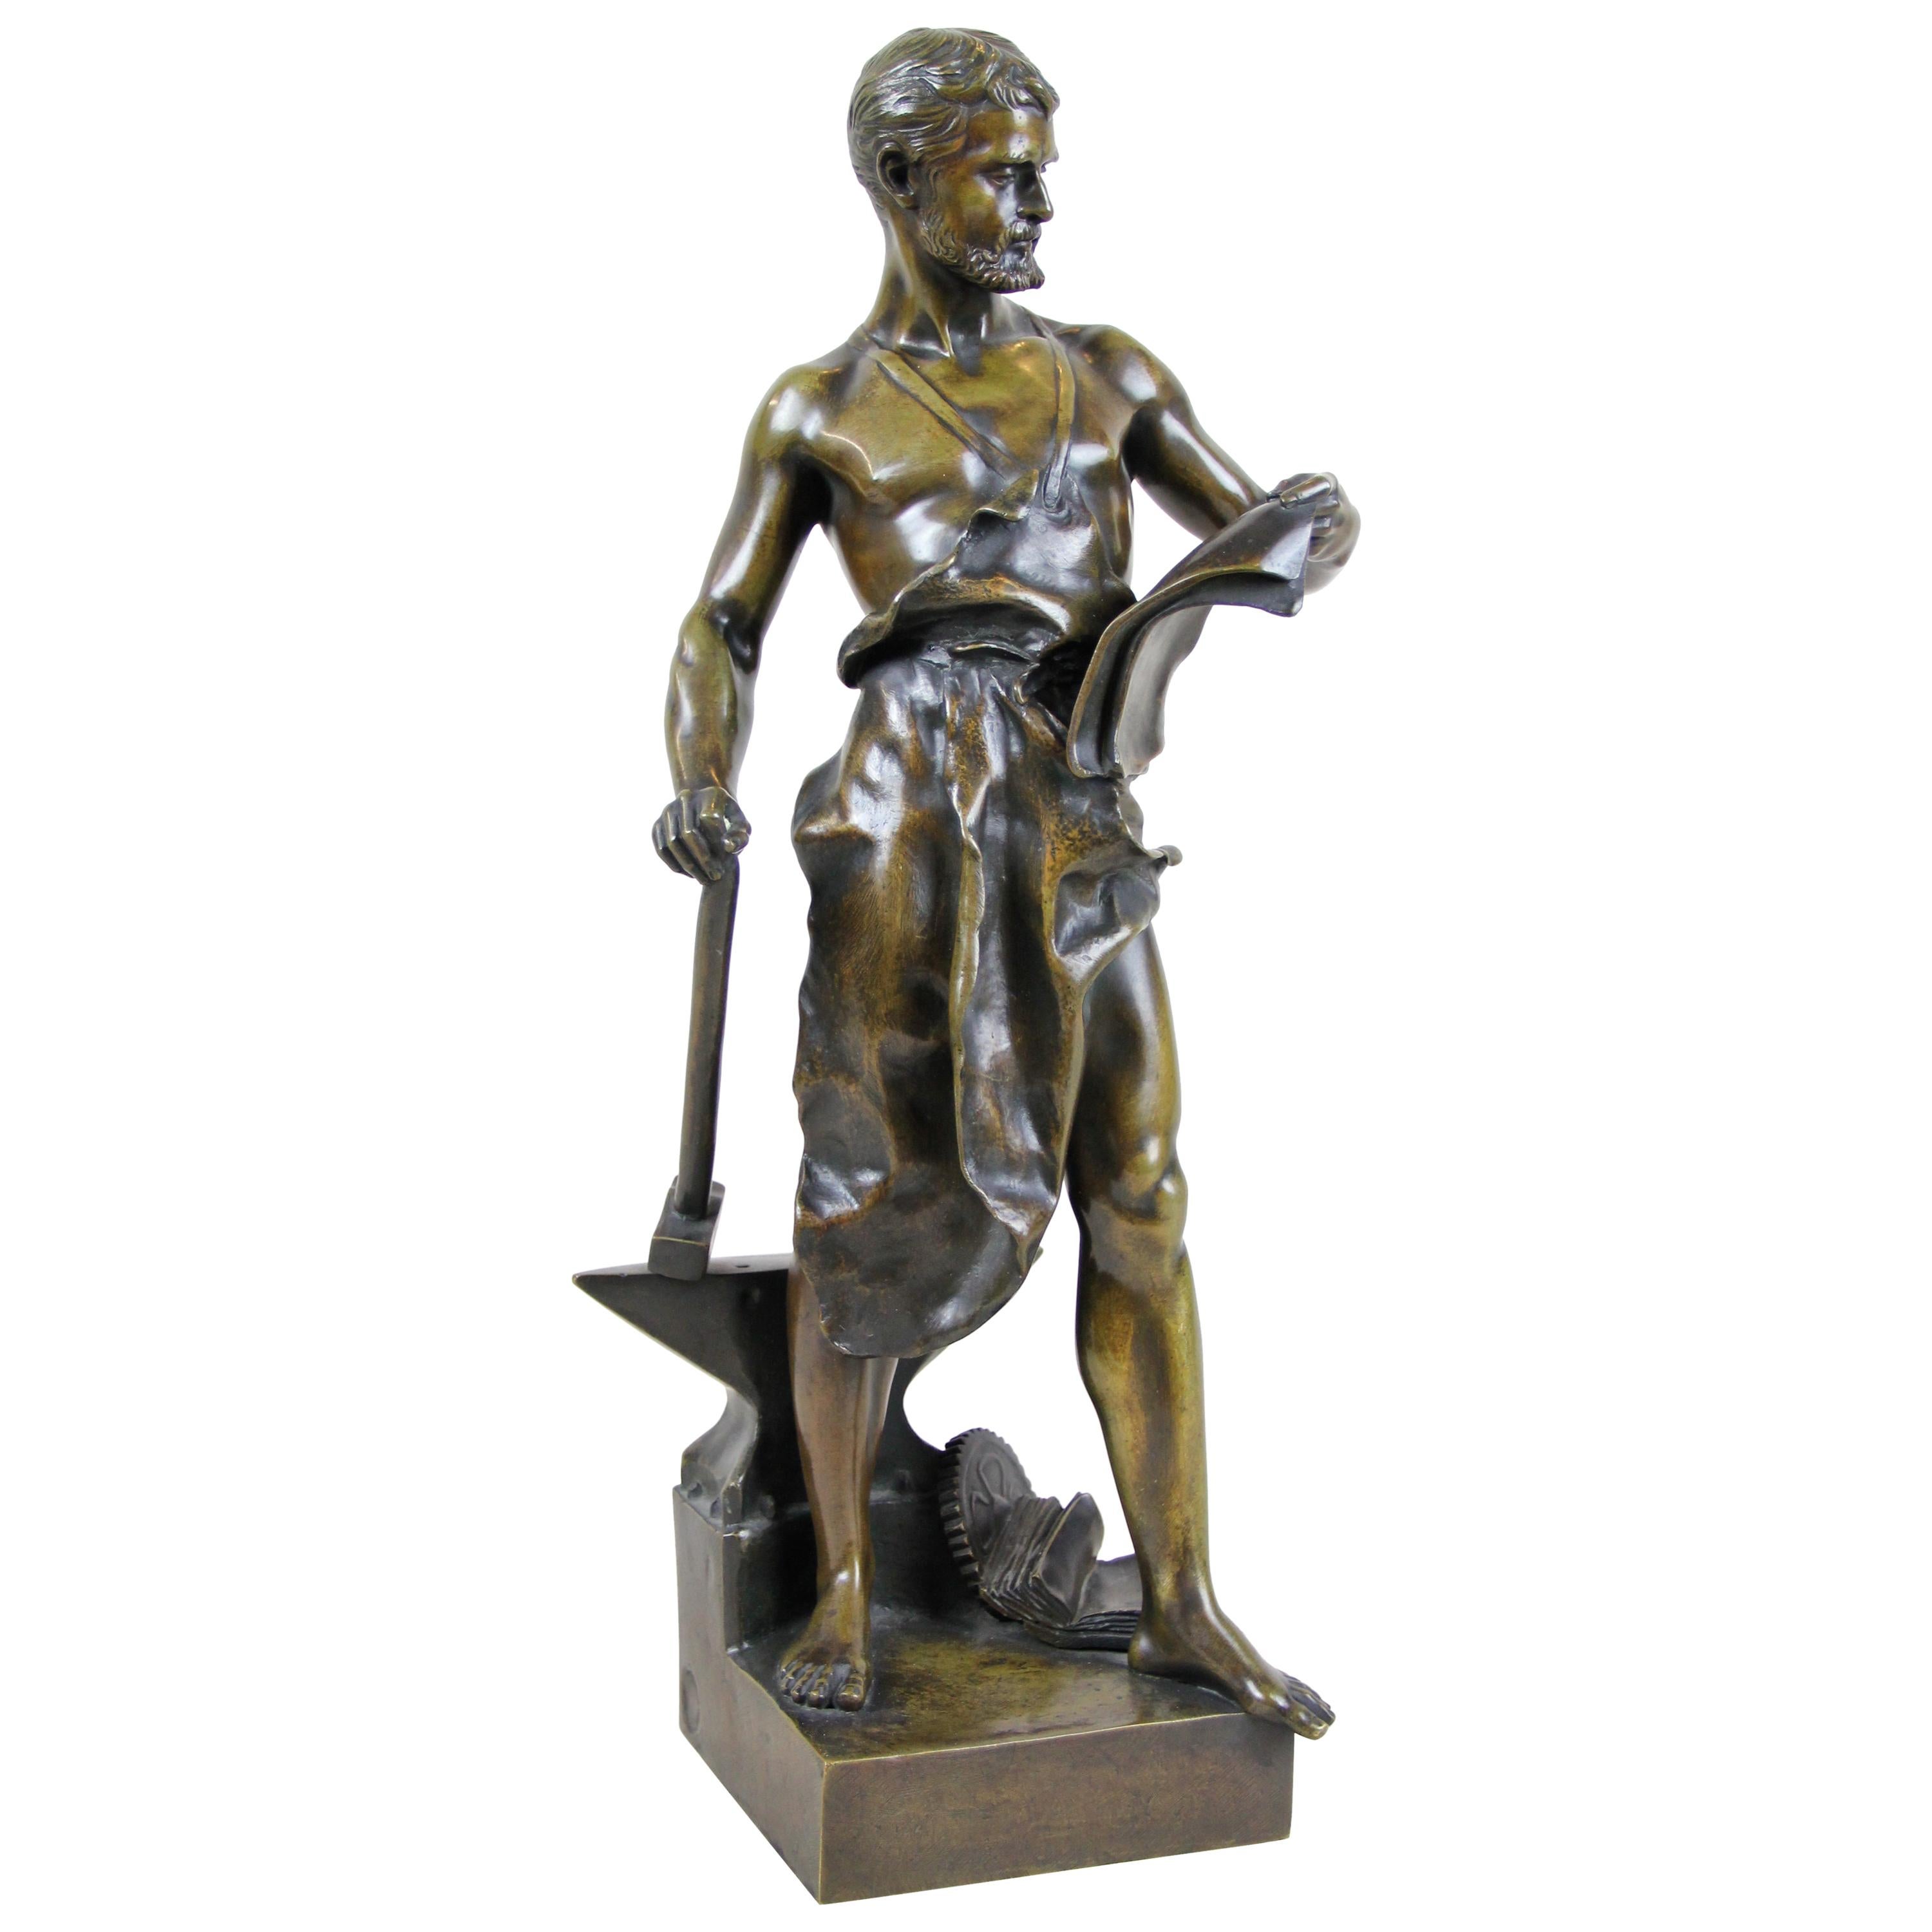 Bronze Sculpture "Le Forgeron" by J.B. Germain, France, circa 1900